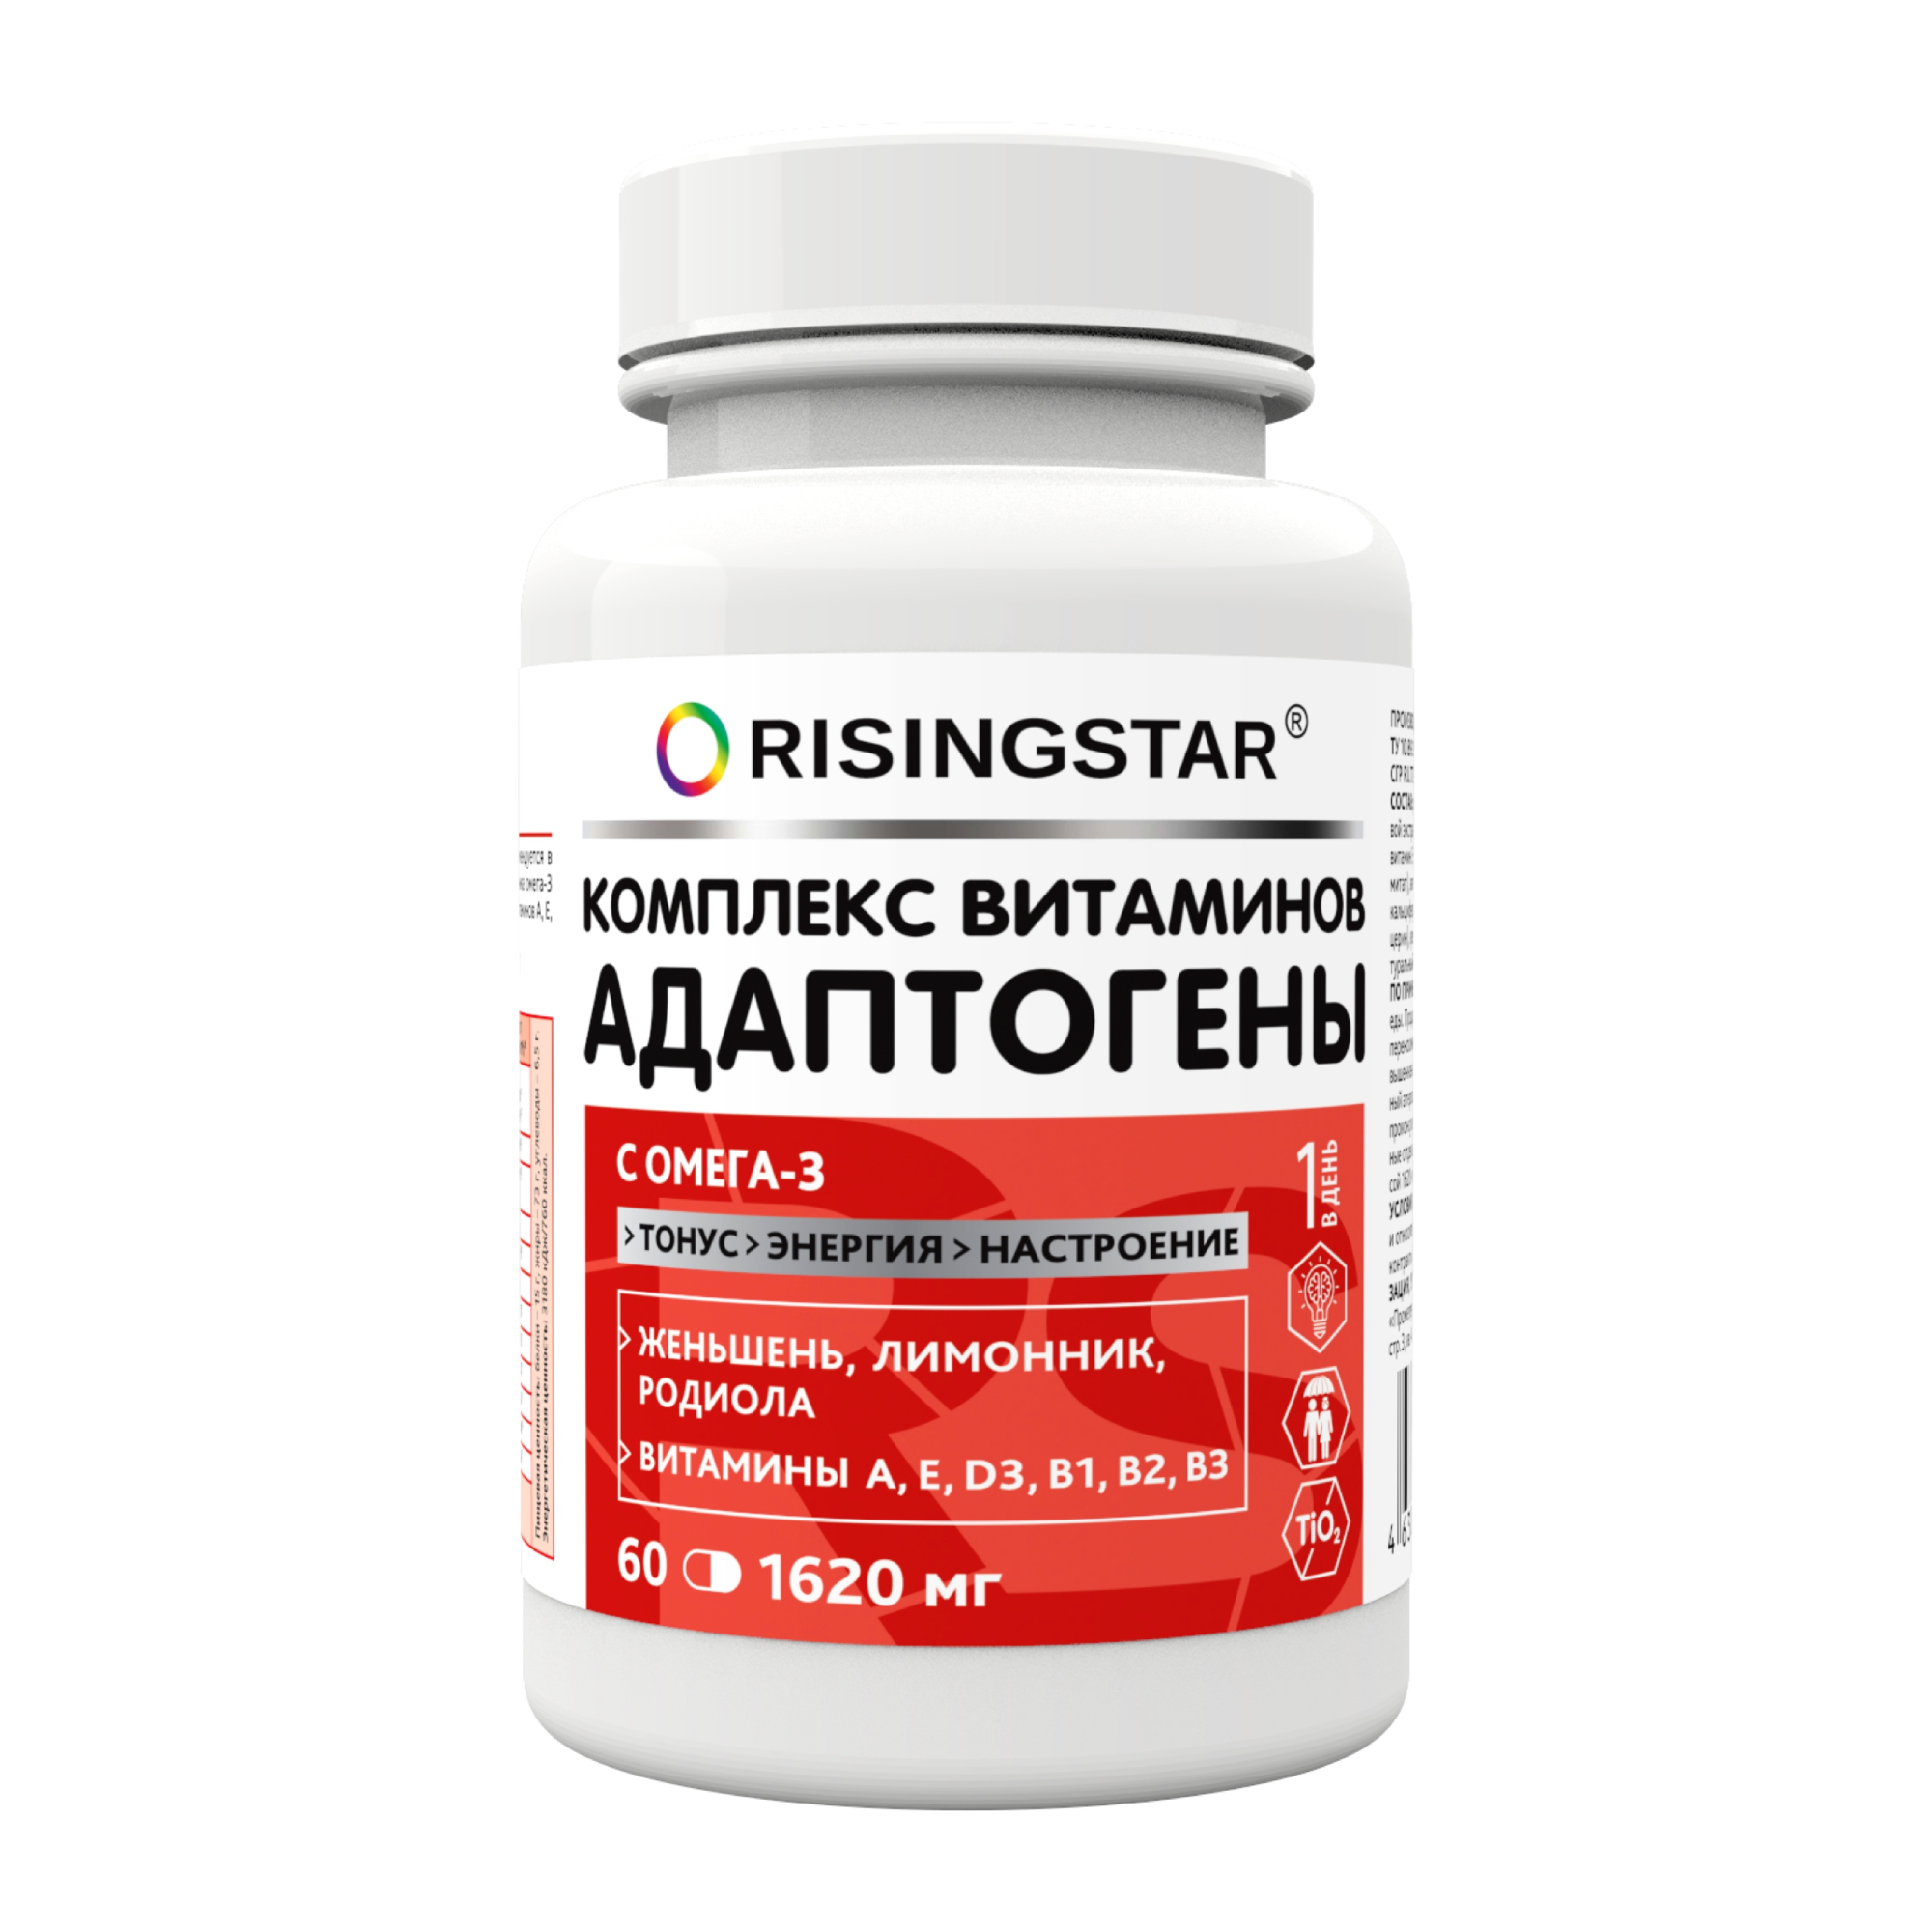 БАД Risingstar комплекс витаминов адаптогены с омега-3 60 таблеток, 100 г